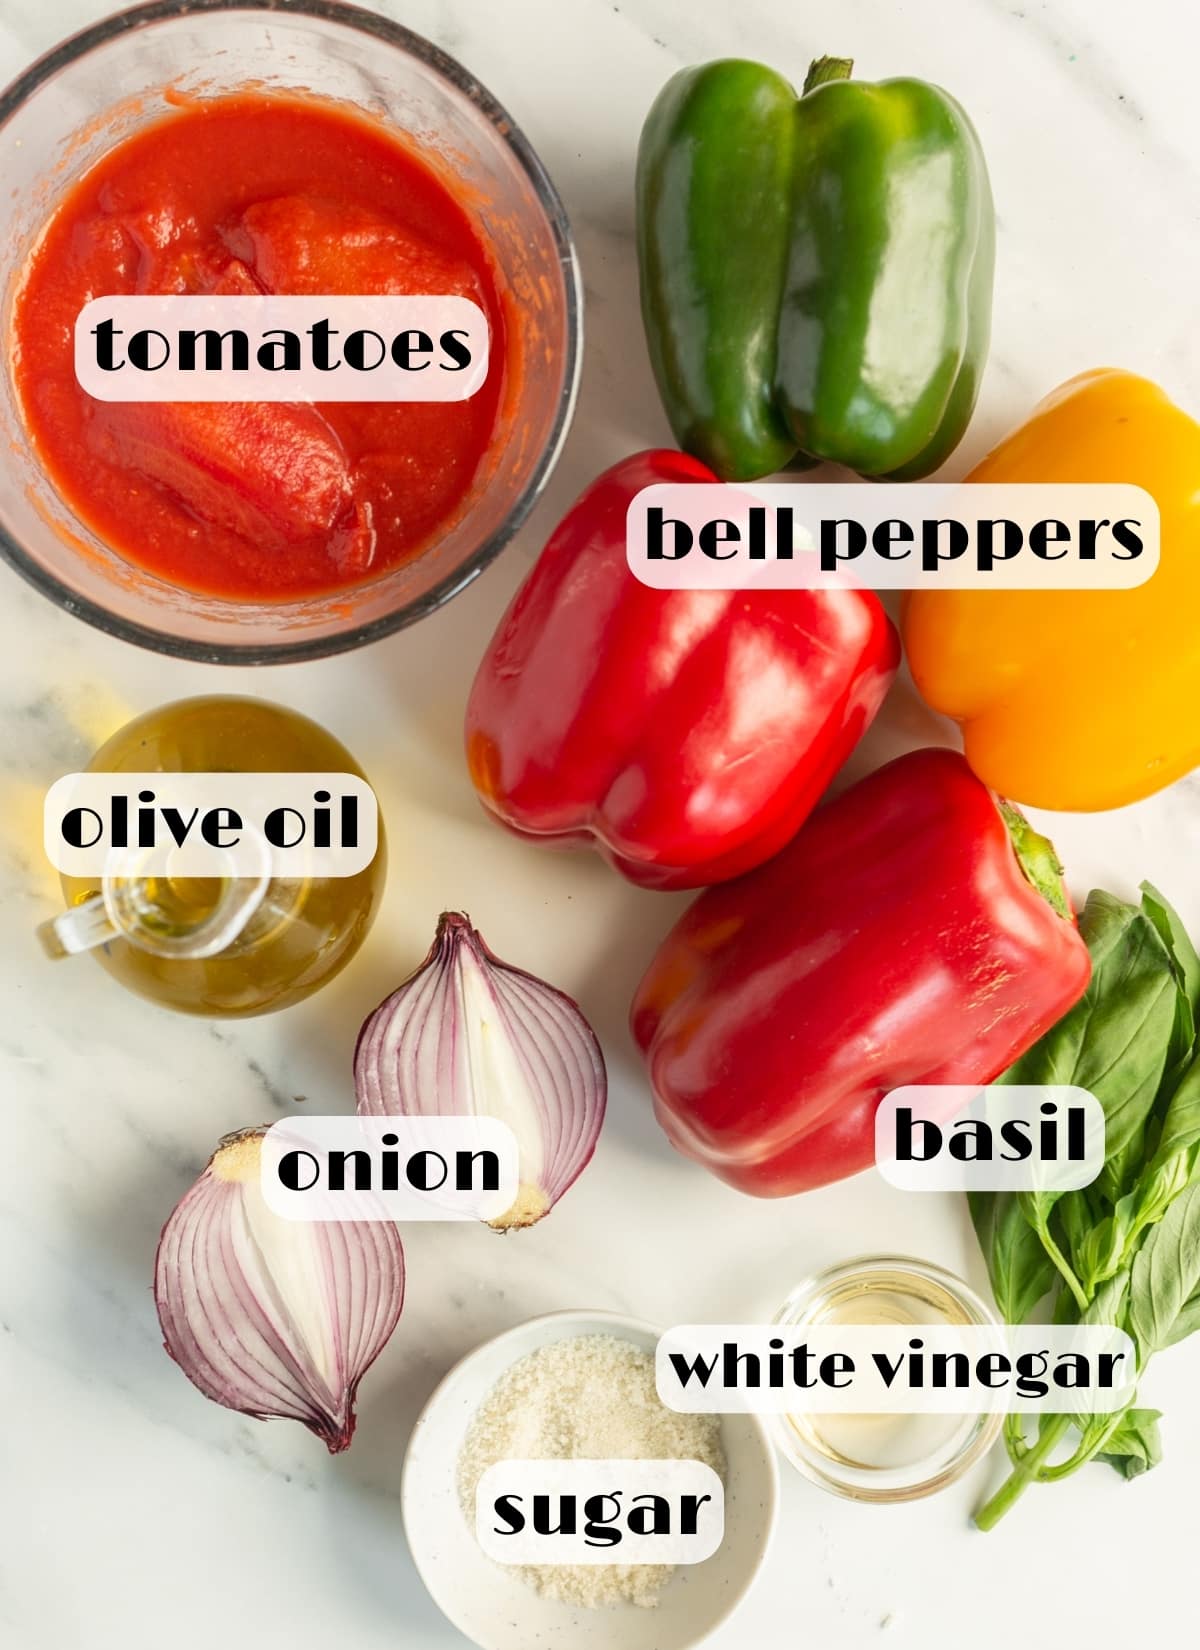 peperonata ingredients: bell peppers, onion, basil, olive oil,tomatoes, sugar, white vinegar.